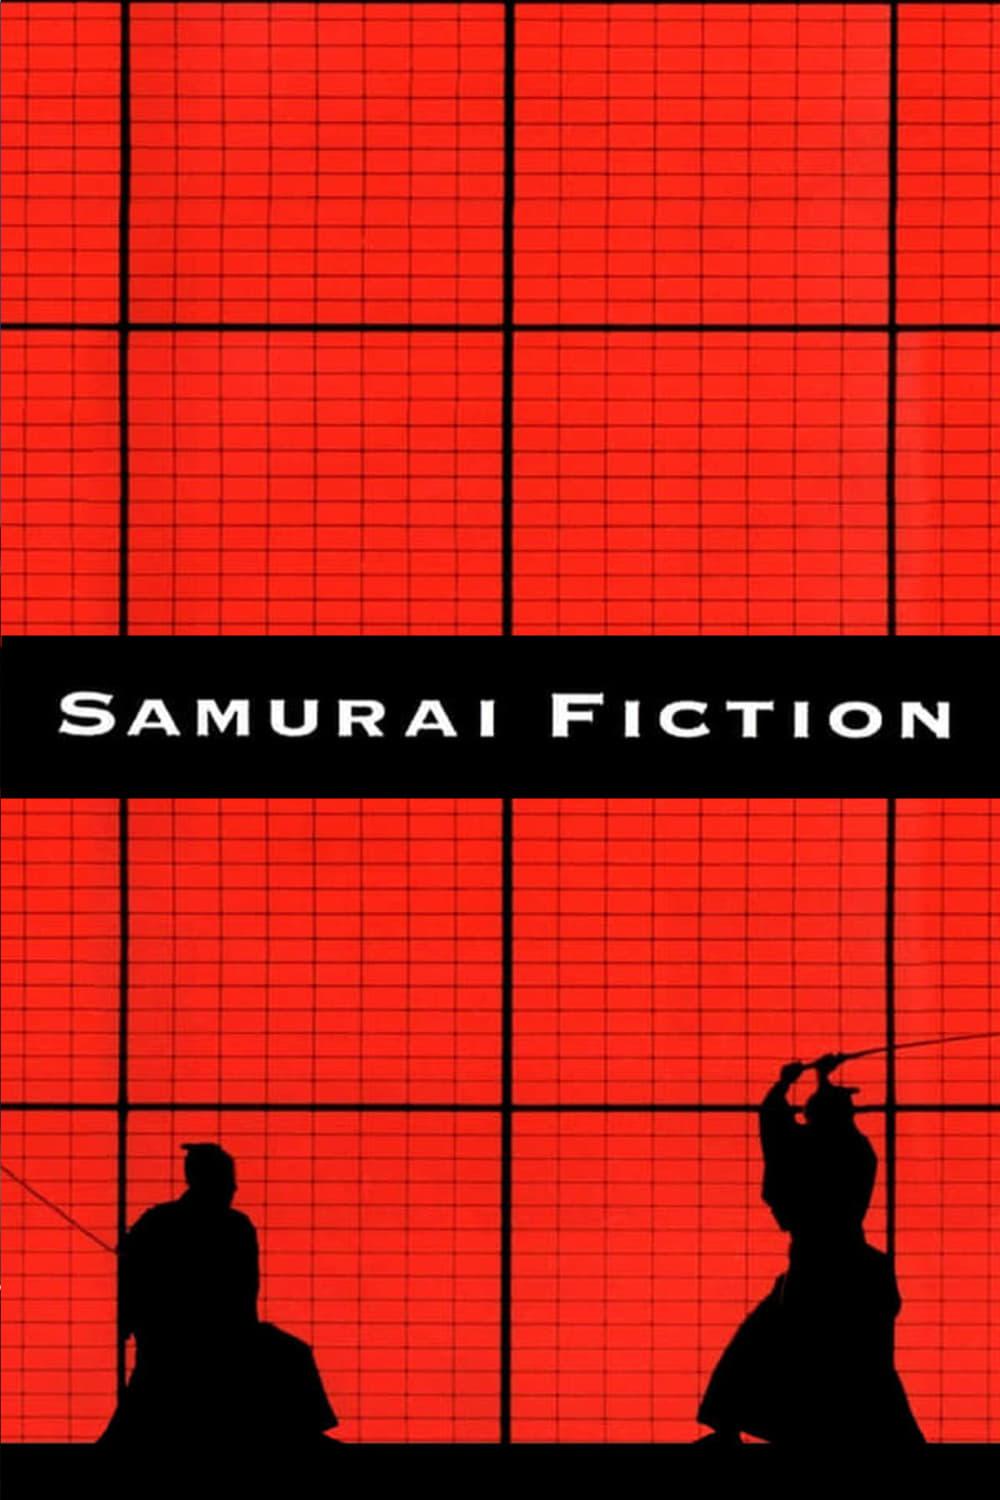 Samurai Fiction poster